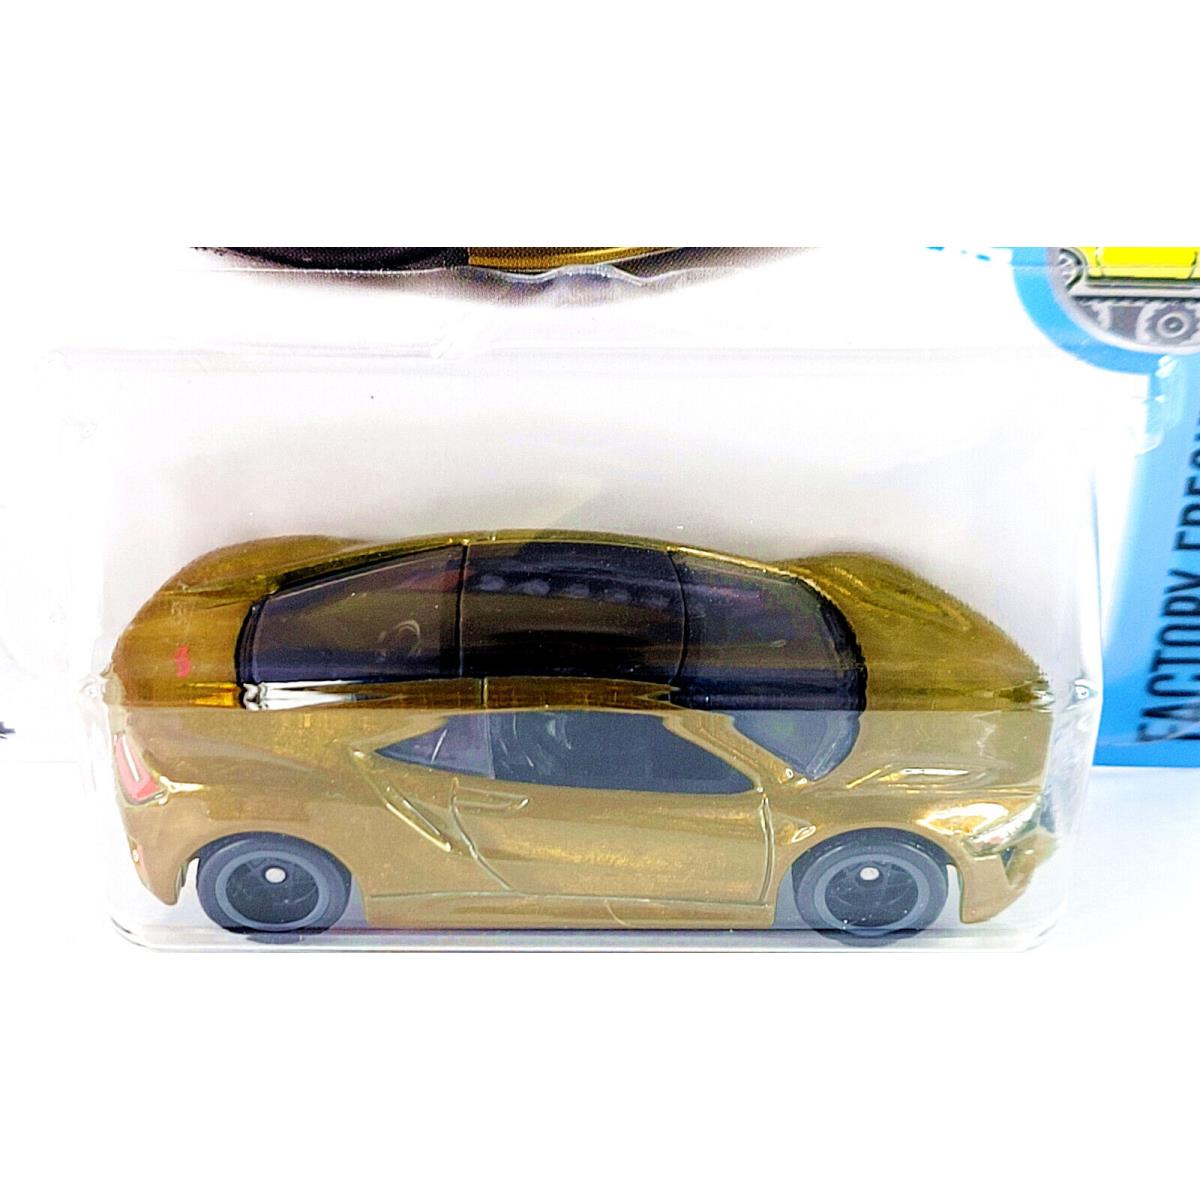 Hot Wheels toy Honda NSX - Yellow